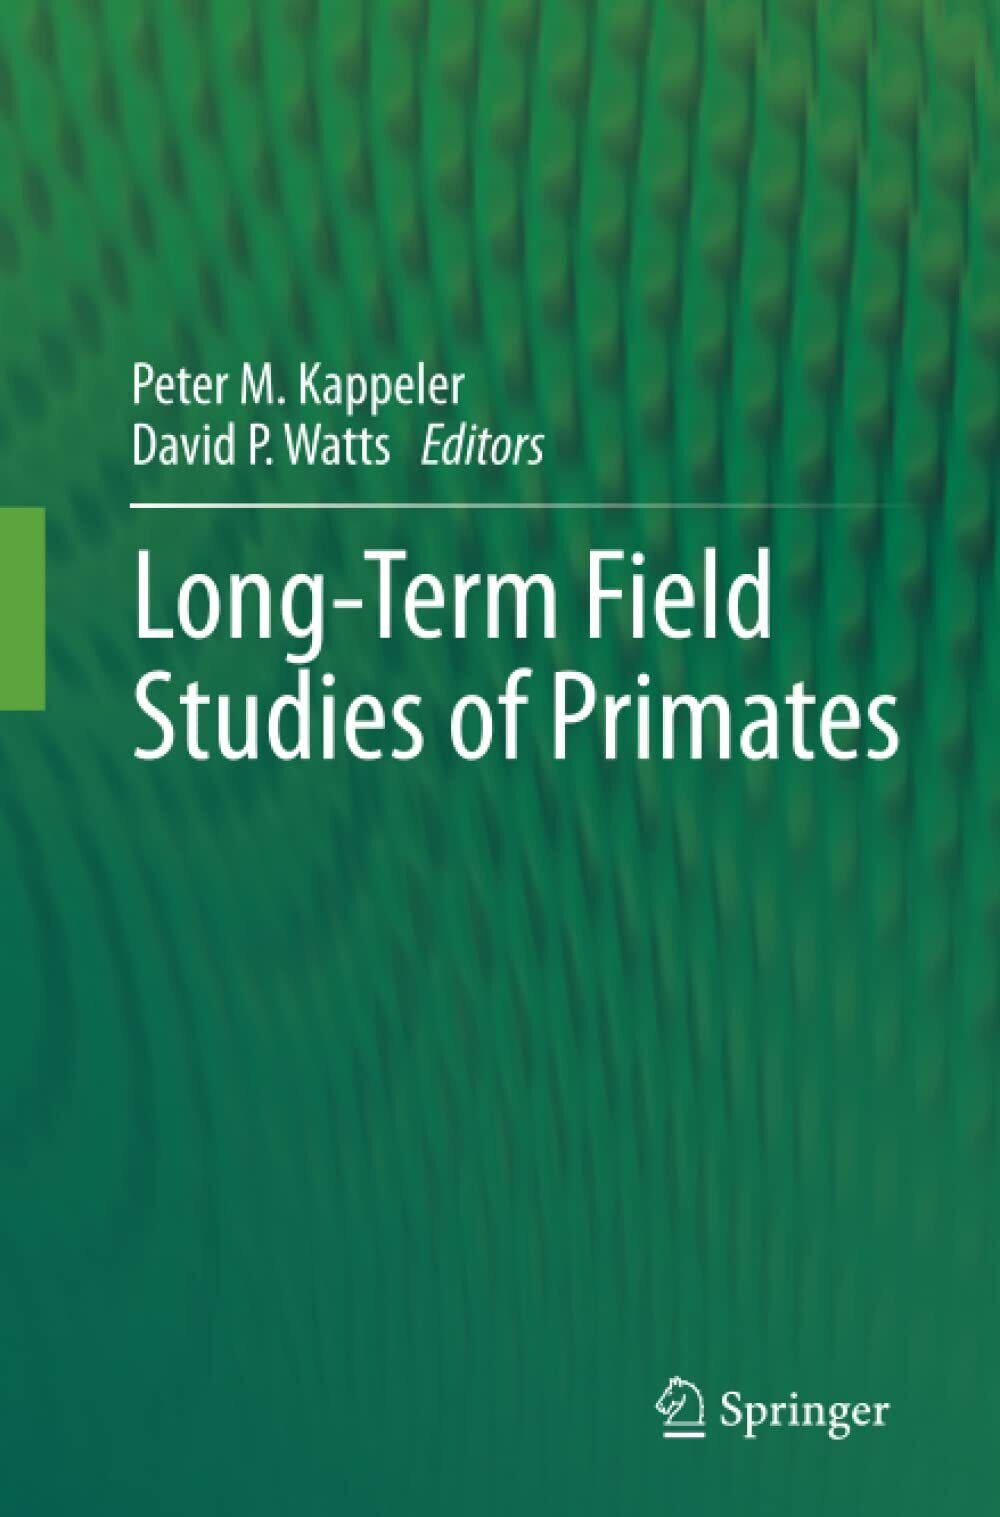 Long-Term Field Studies of Primates - Peter M. Kappeler - Springer, 2014